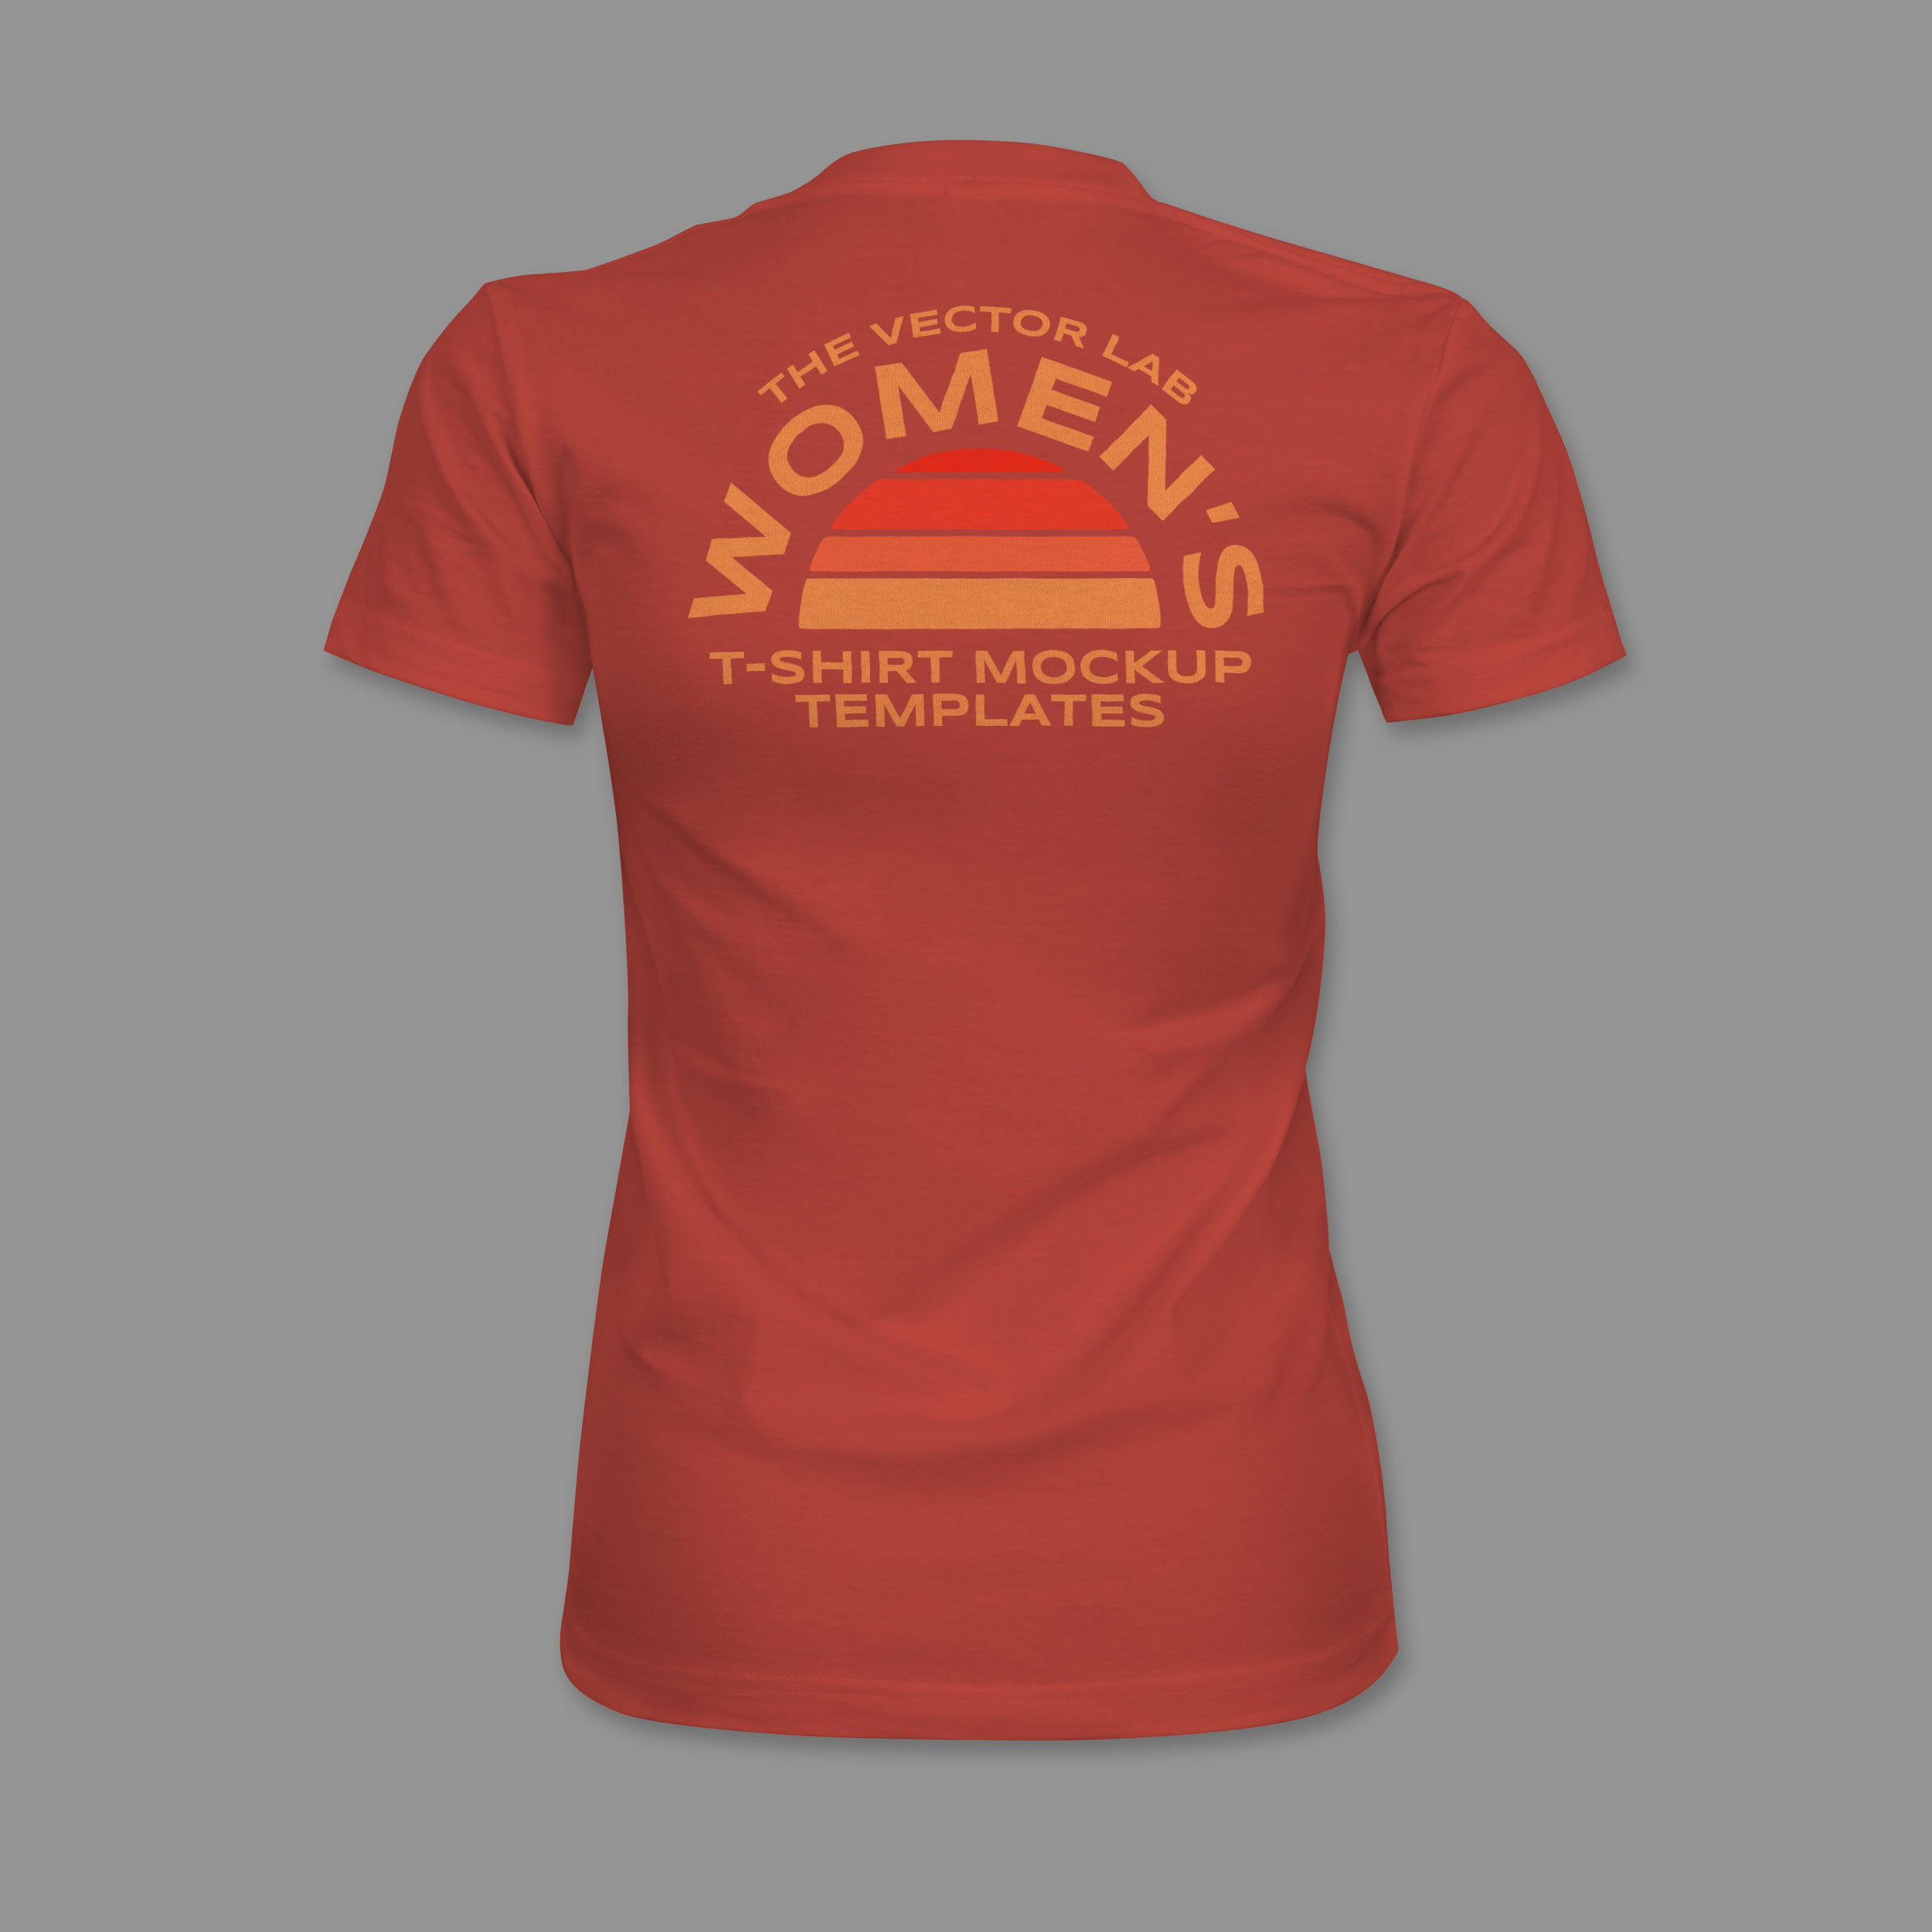 Women's T-Shirt Mockup Templates - Illustrator